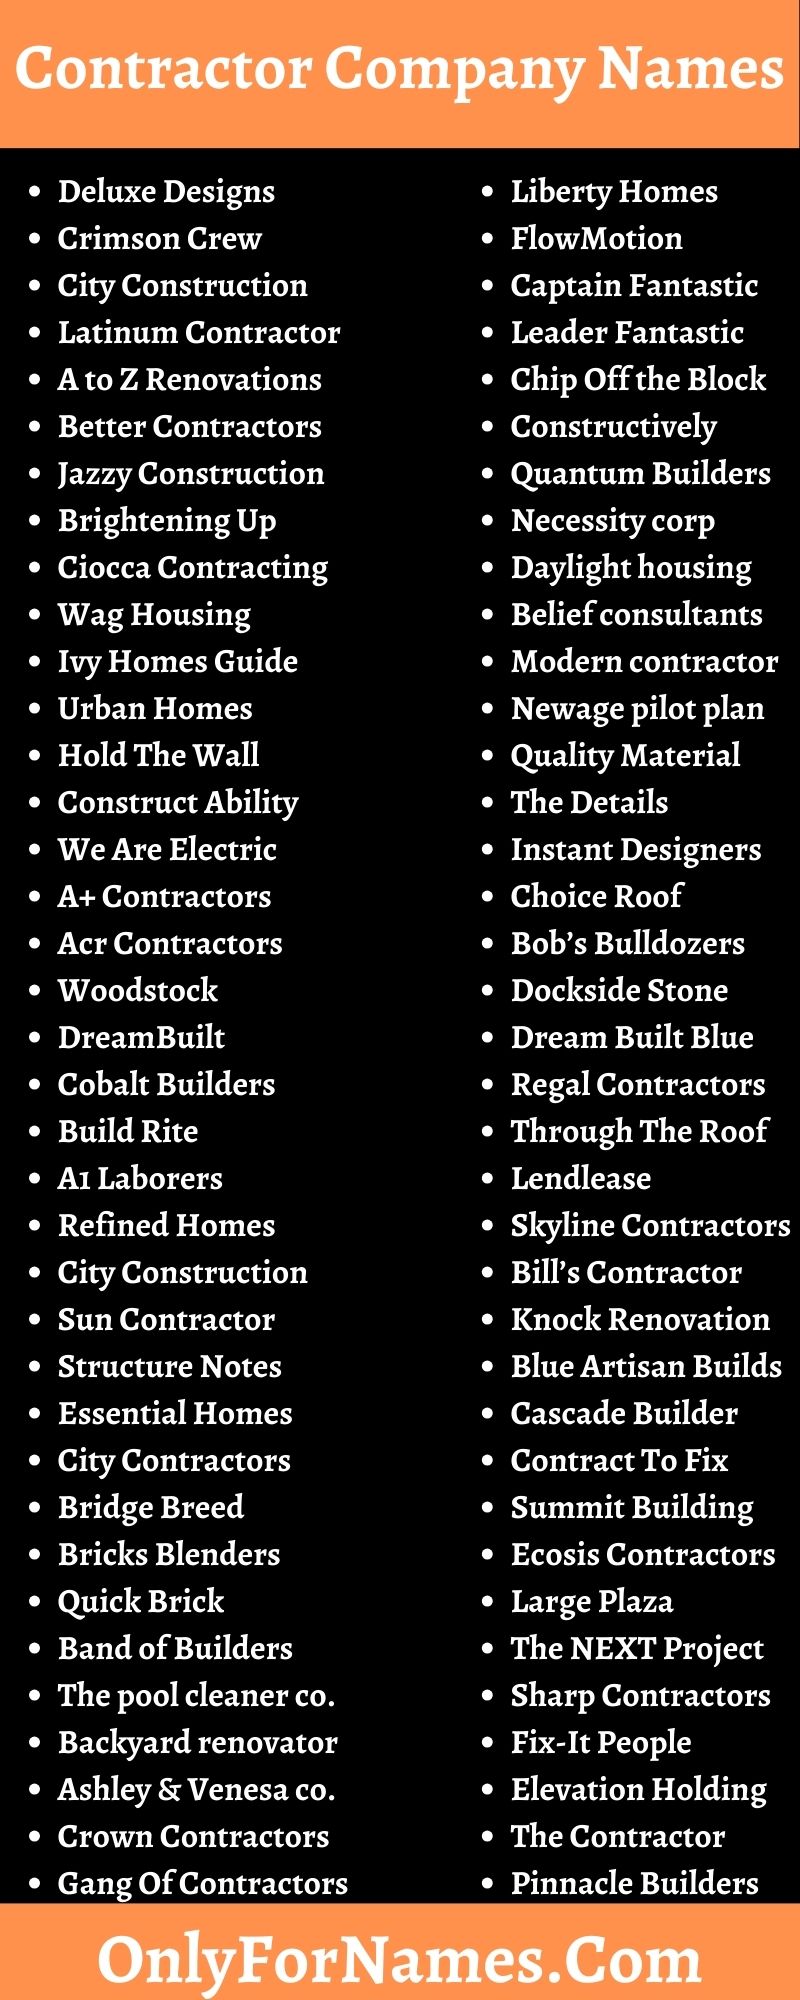 Contractor Company Names